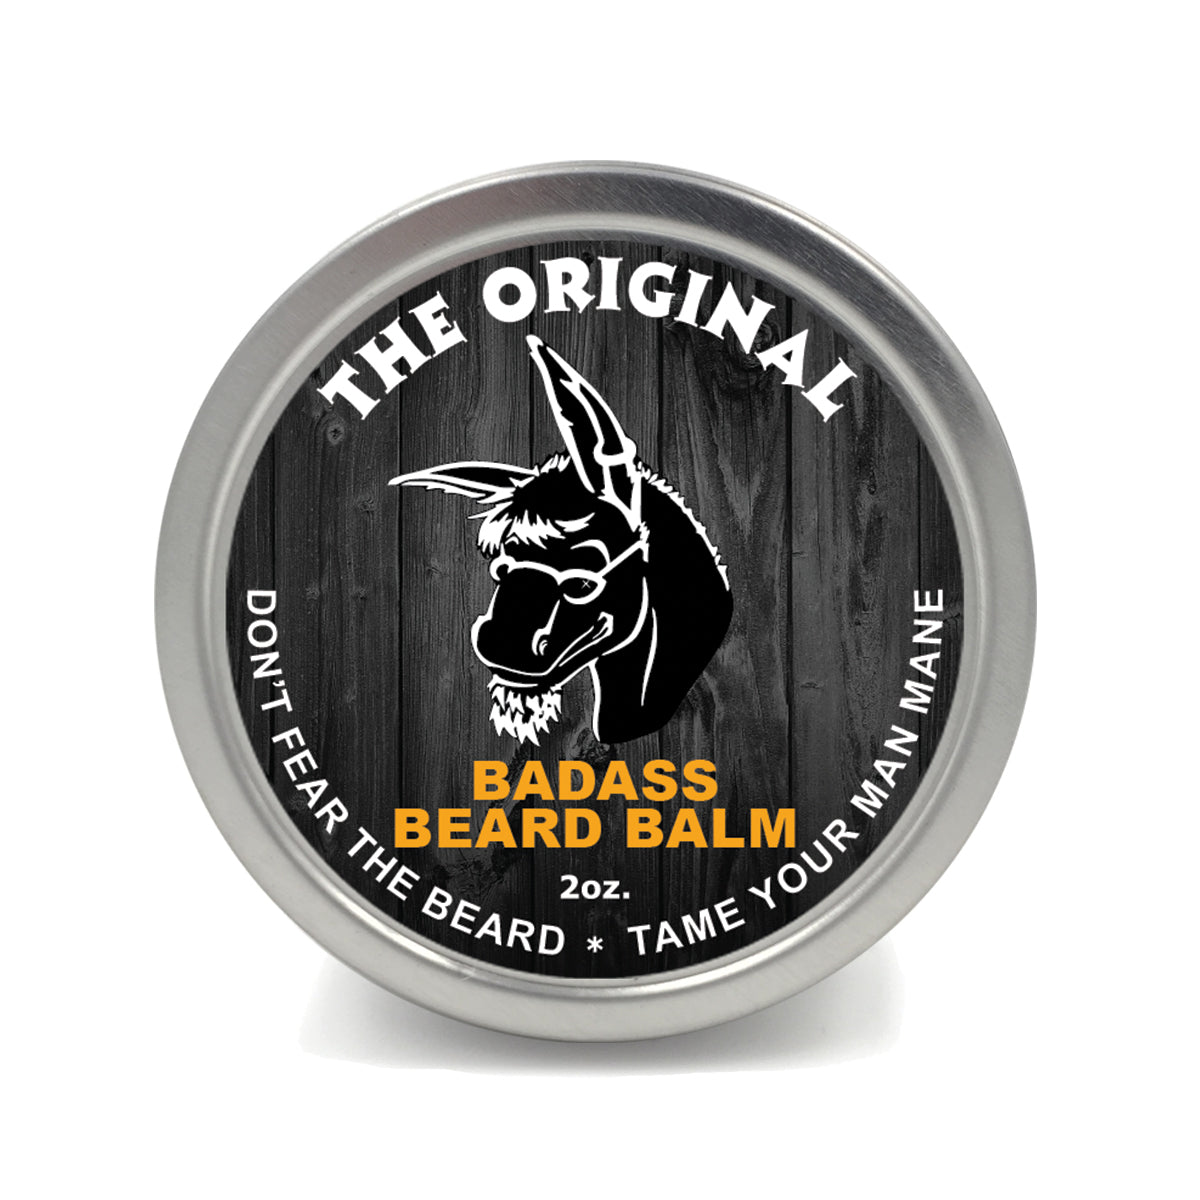 The Original Beard Balm